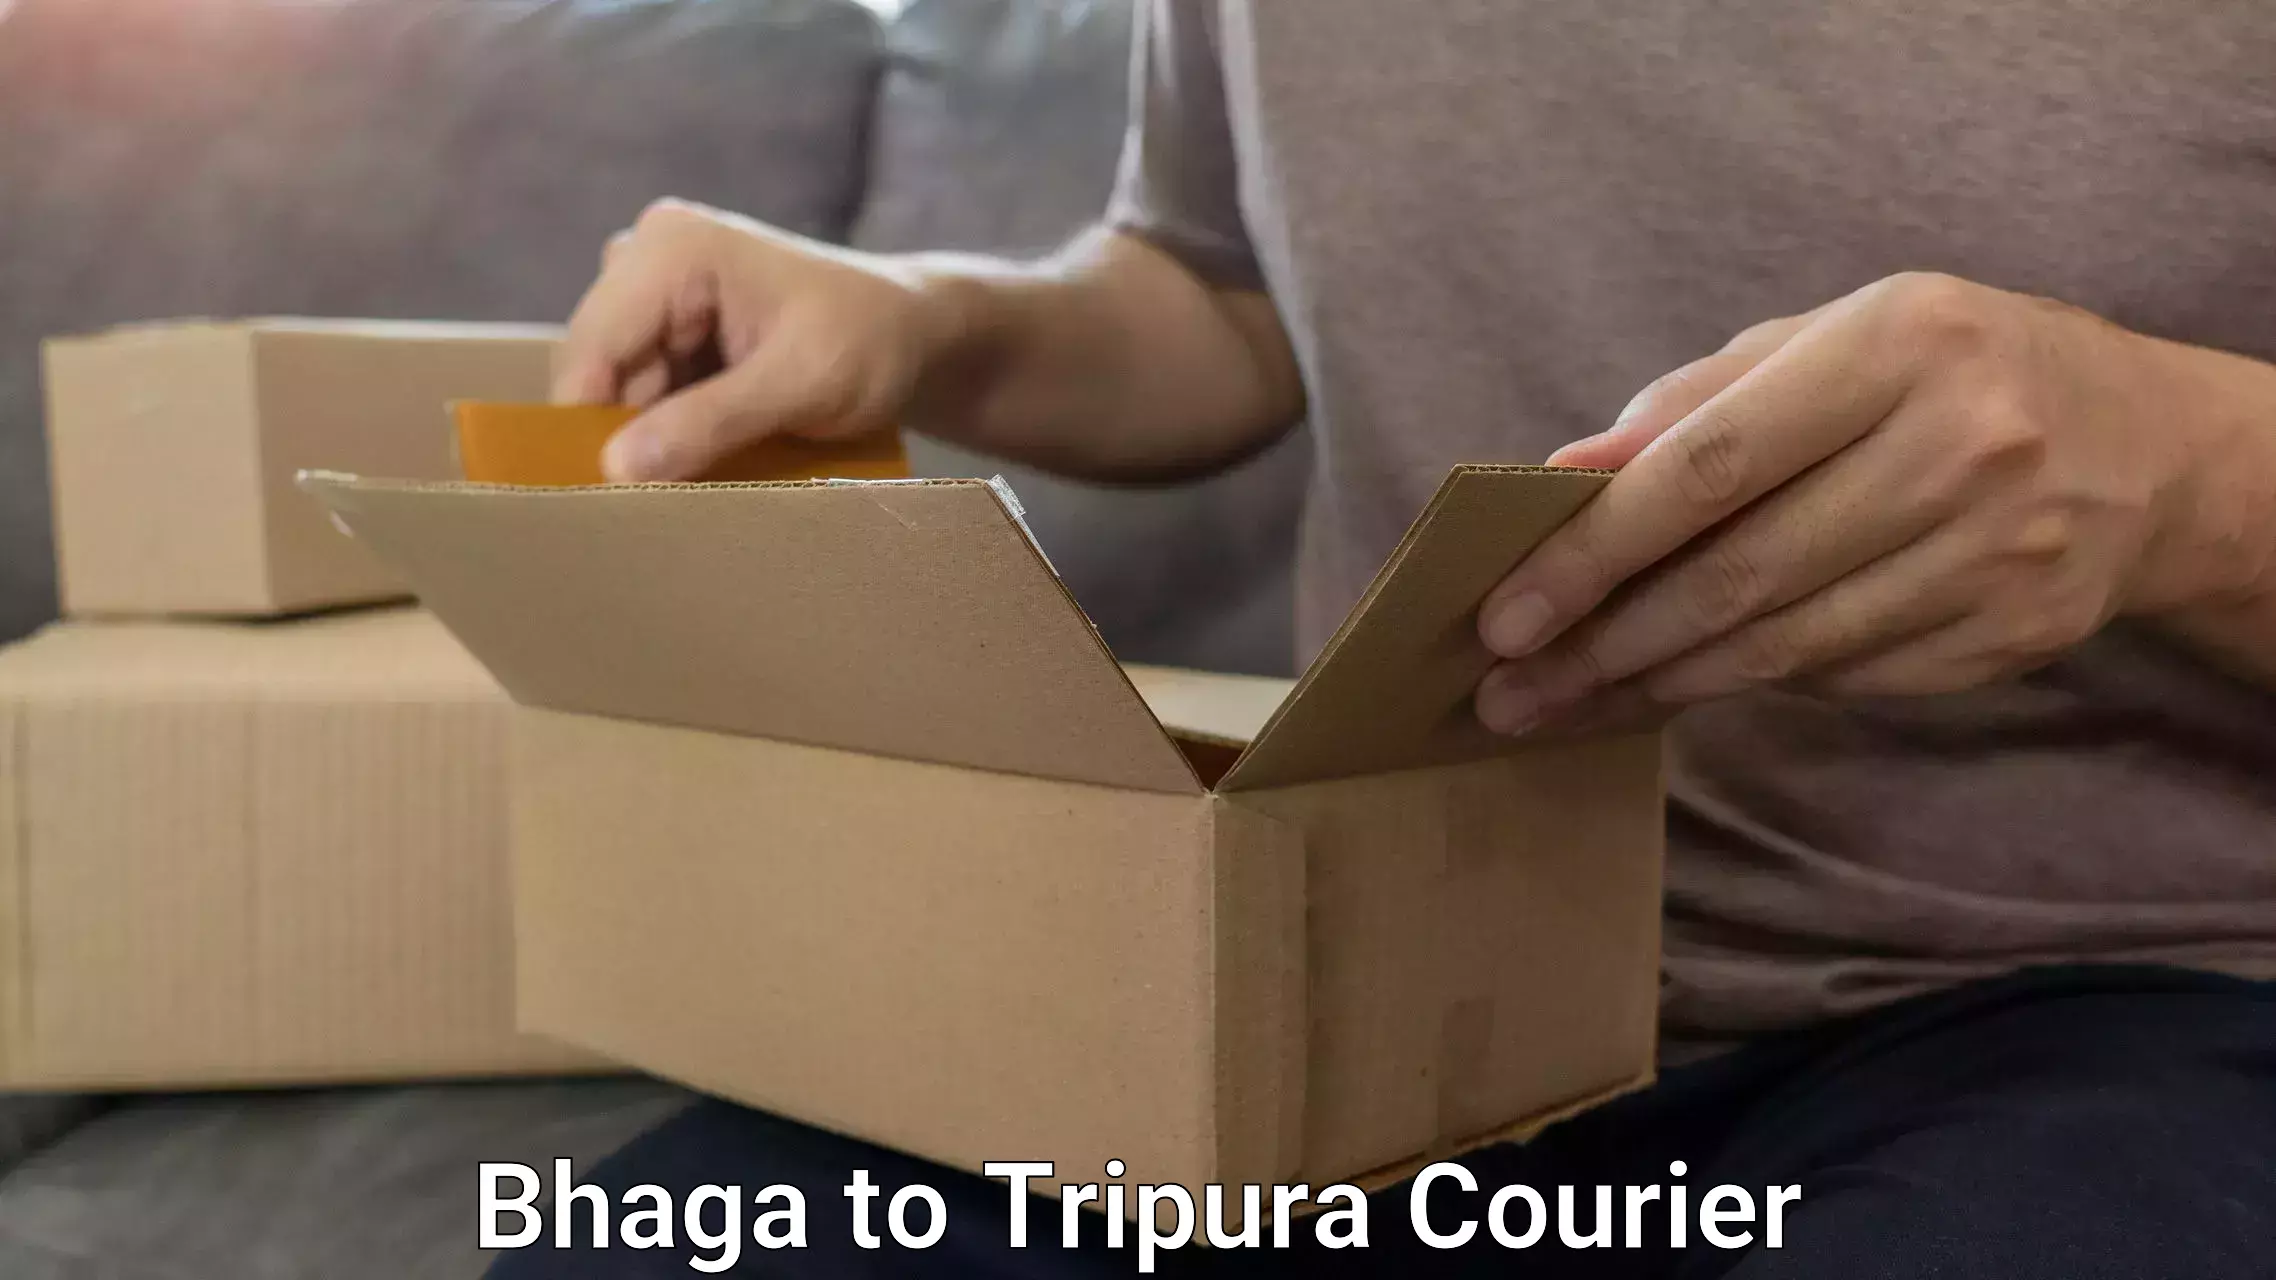 Comprehensive baggage service Bhaga to Udaipur Tripura